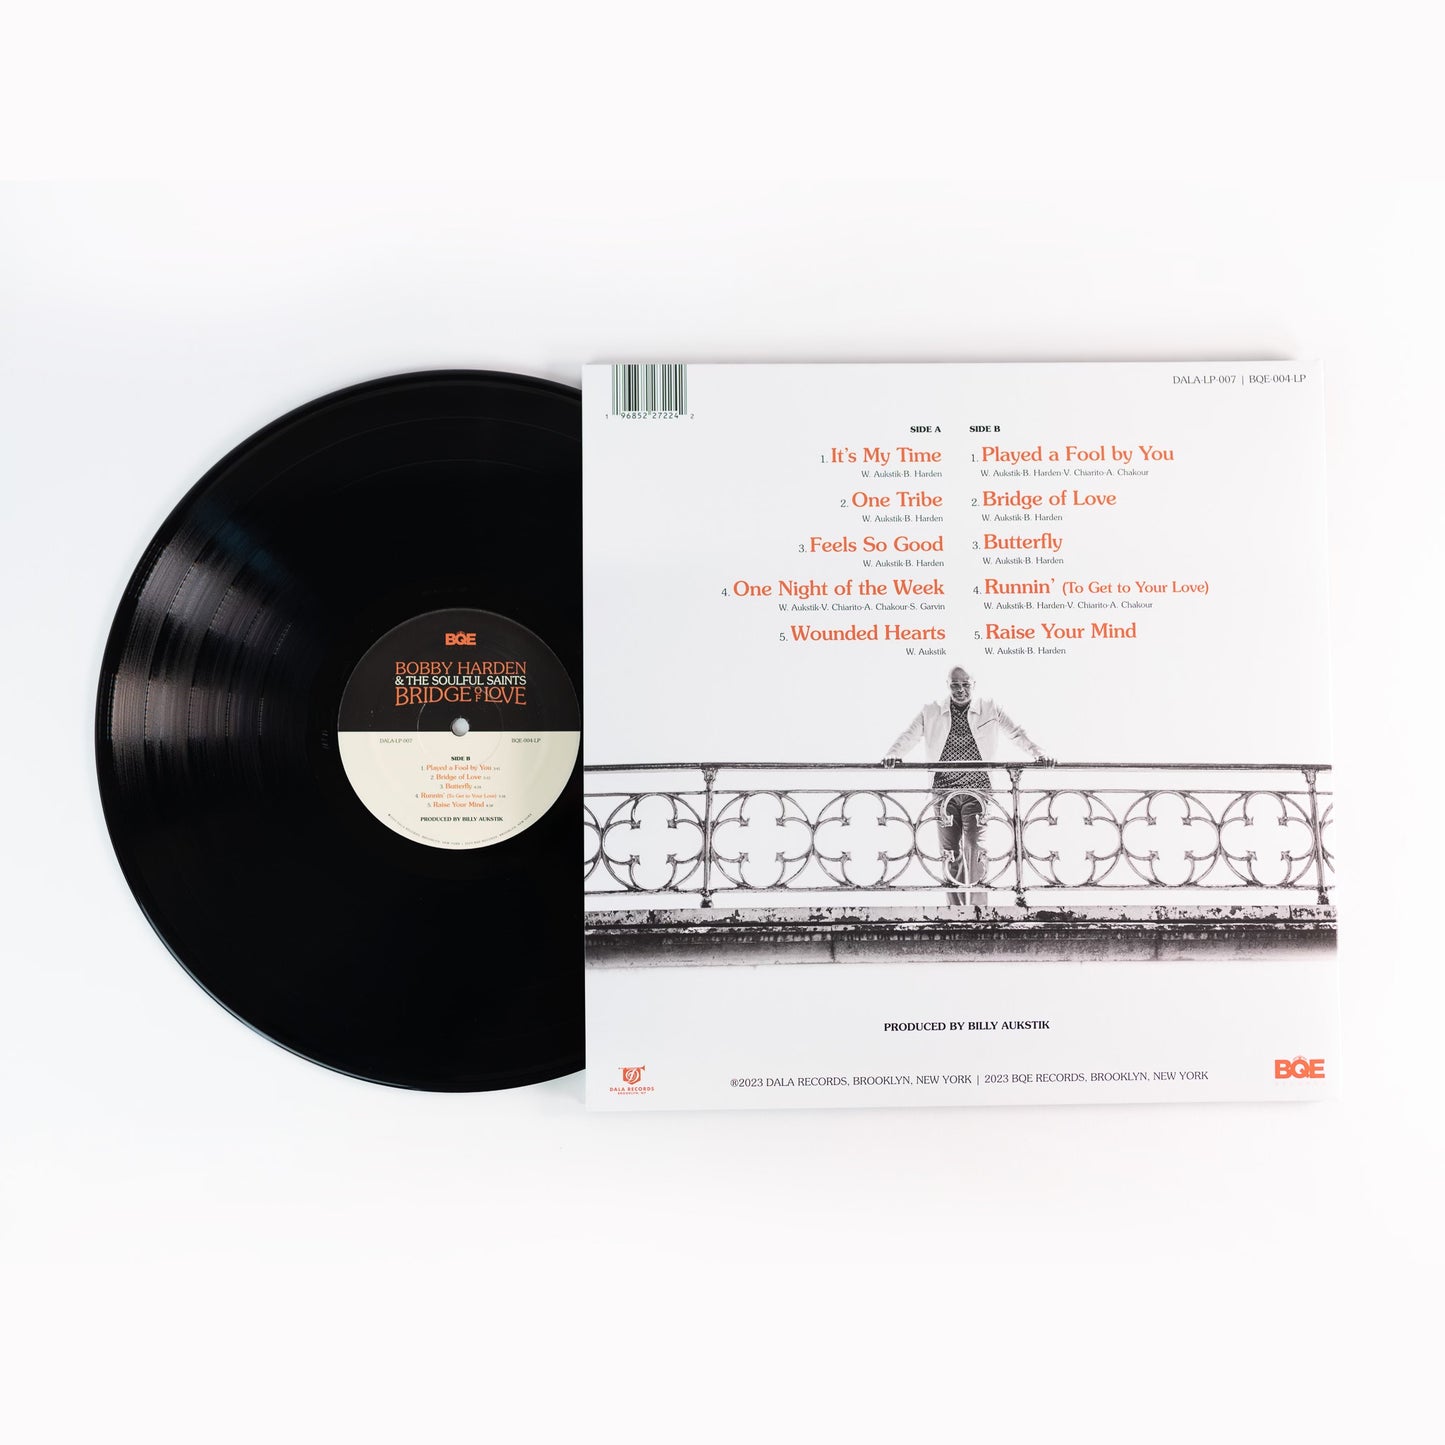 Bobby Harden & The Soulful Saints "Bridge of Love" LP